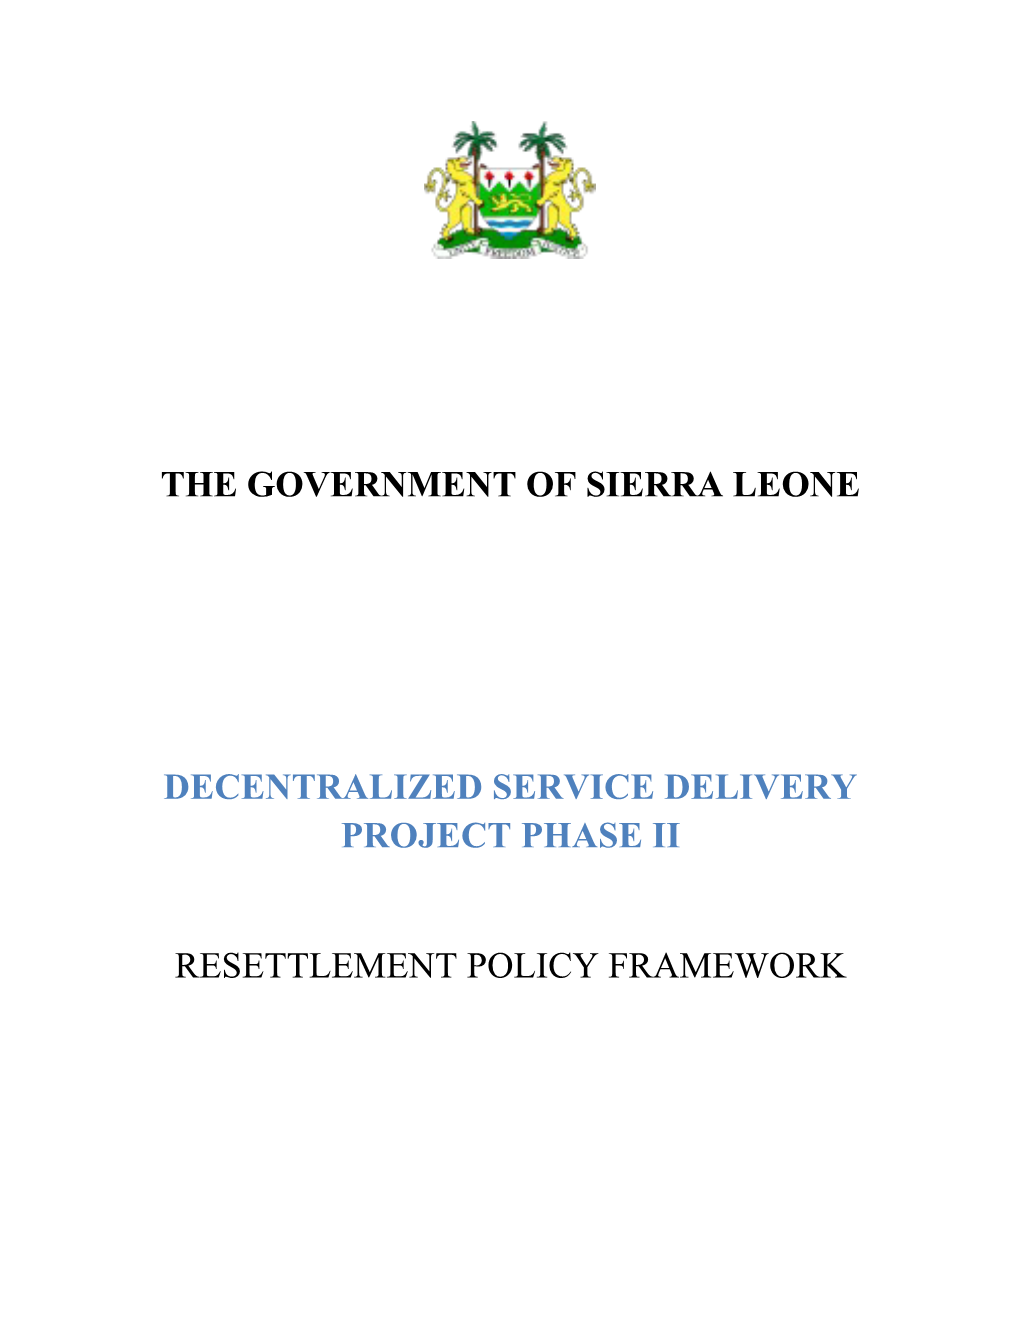 The Governmentof Sierra Leone